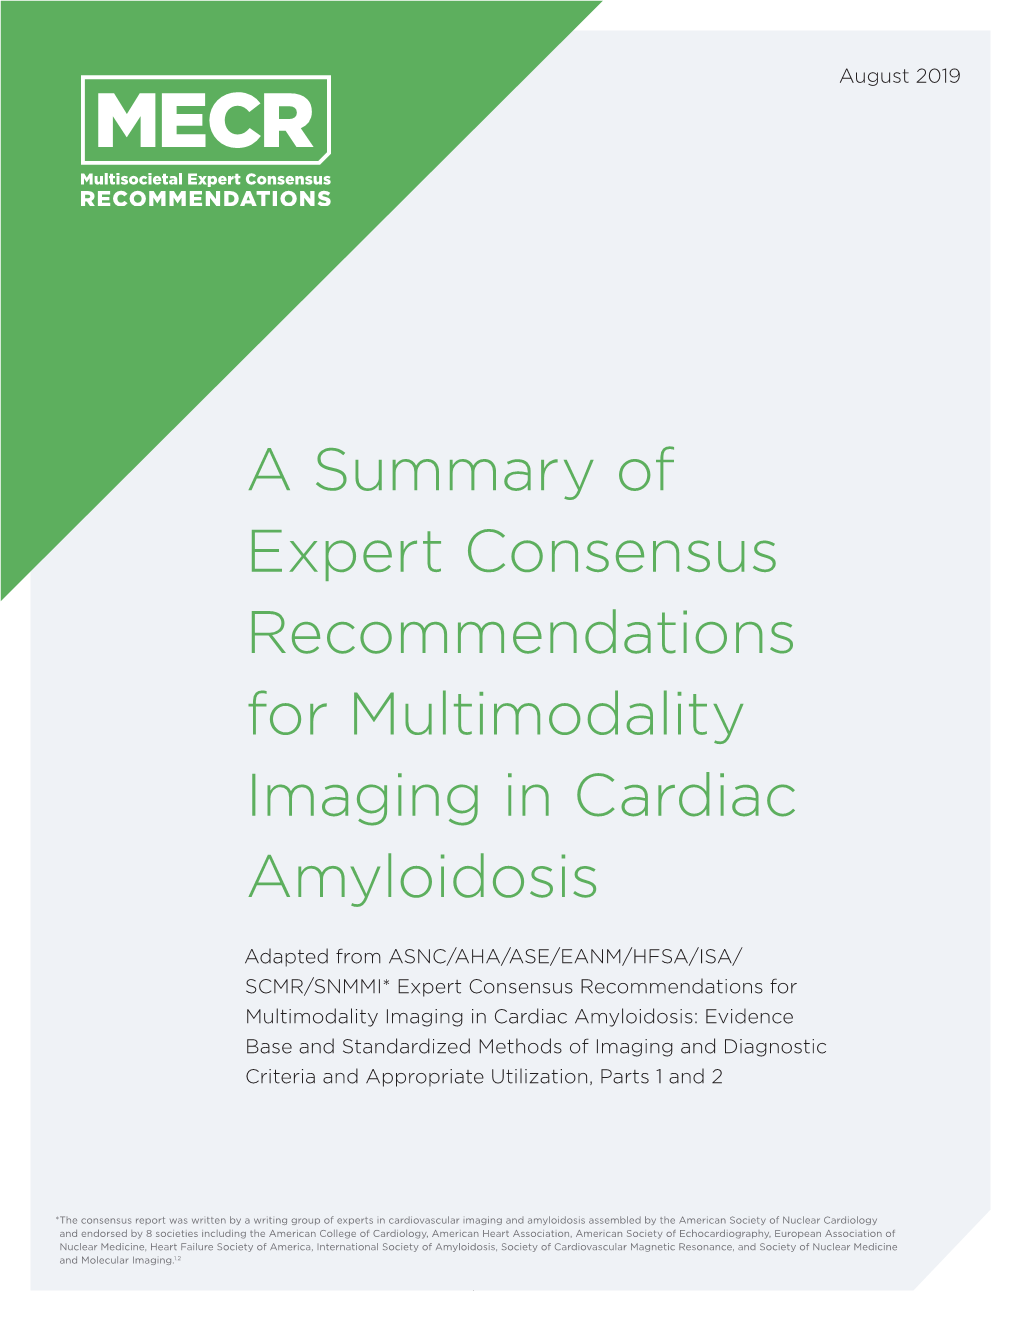 Multimodality Imaging in Cardiac Amyloidosis